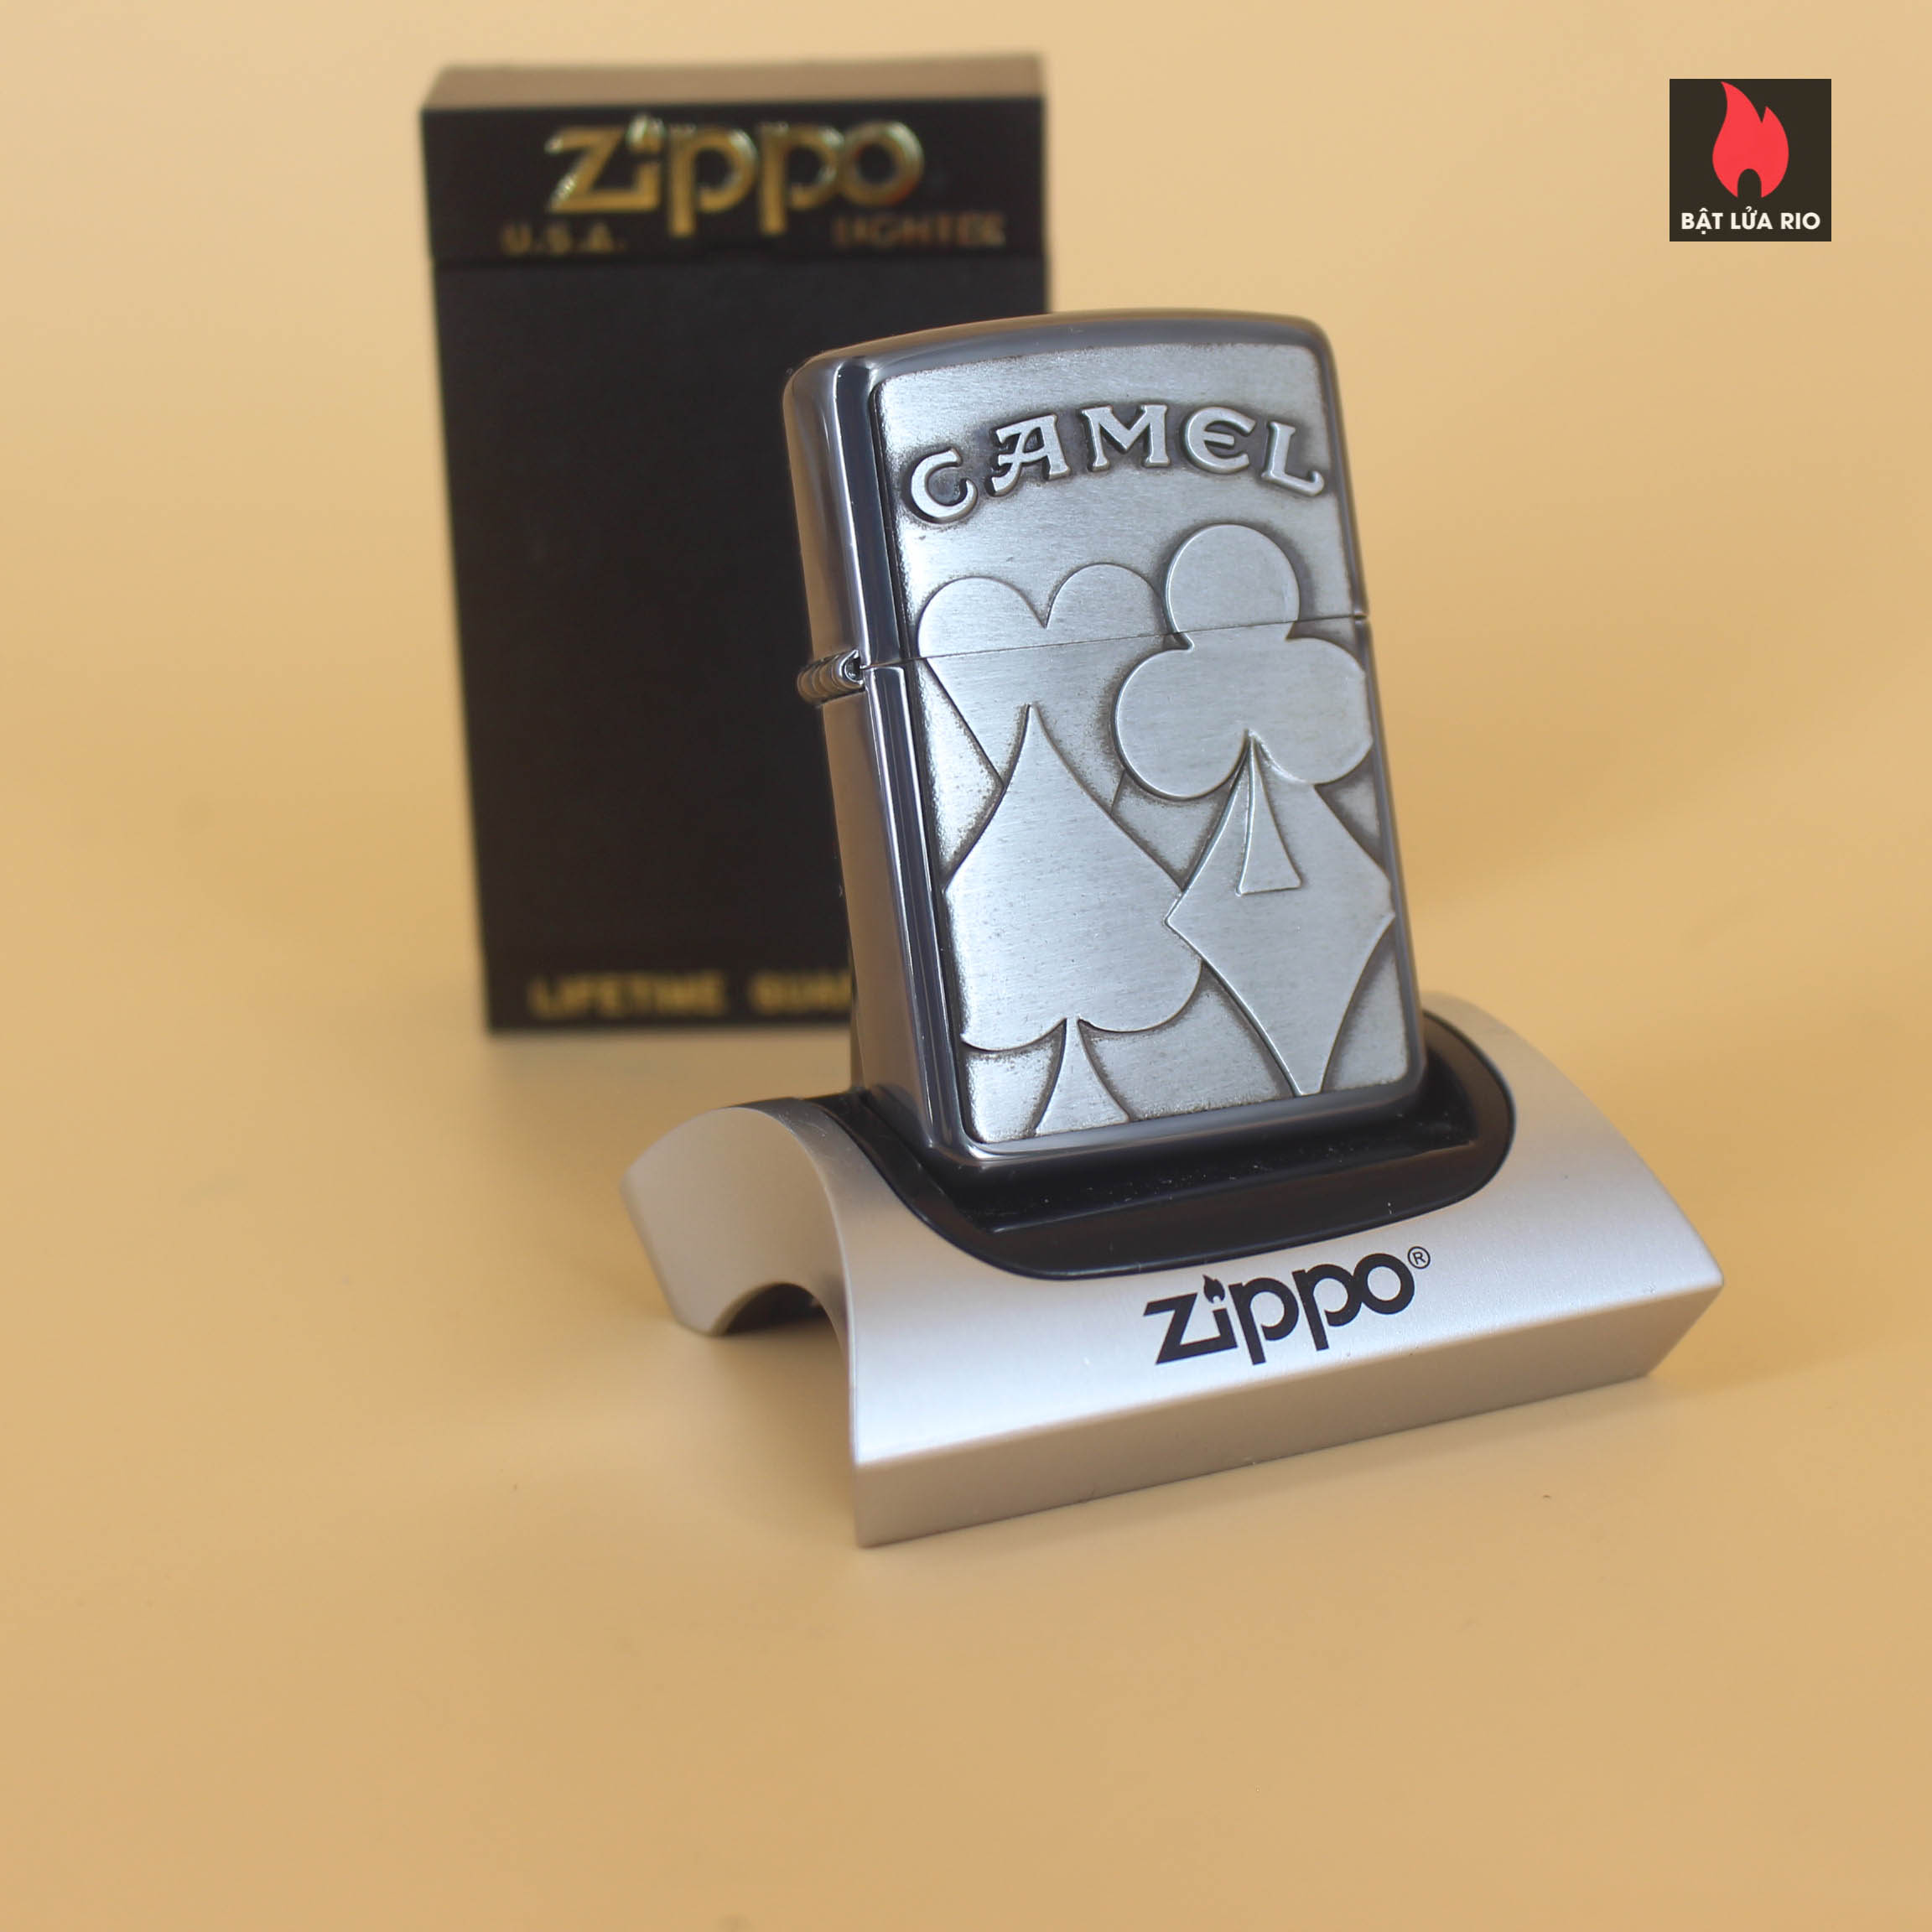 Zippo La Mã 1996 – Midnight Camel Card Suits